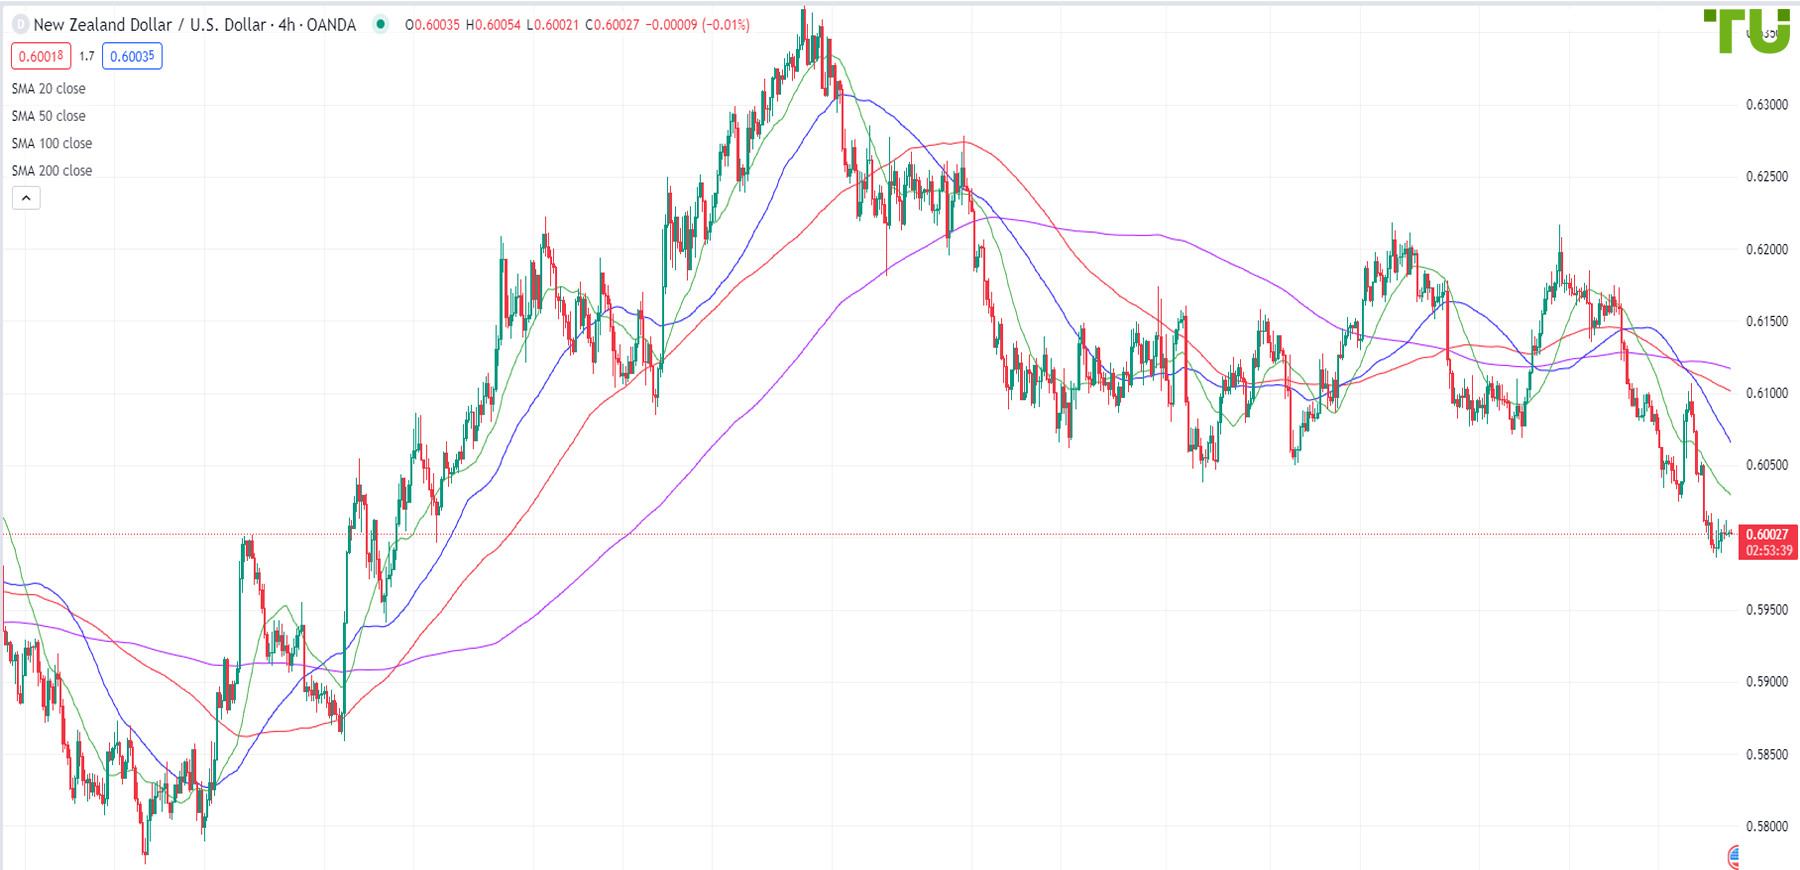 Kiwi/dollar consolidates in a narrow range